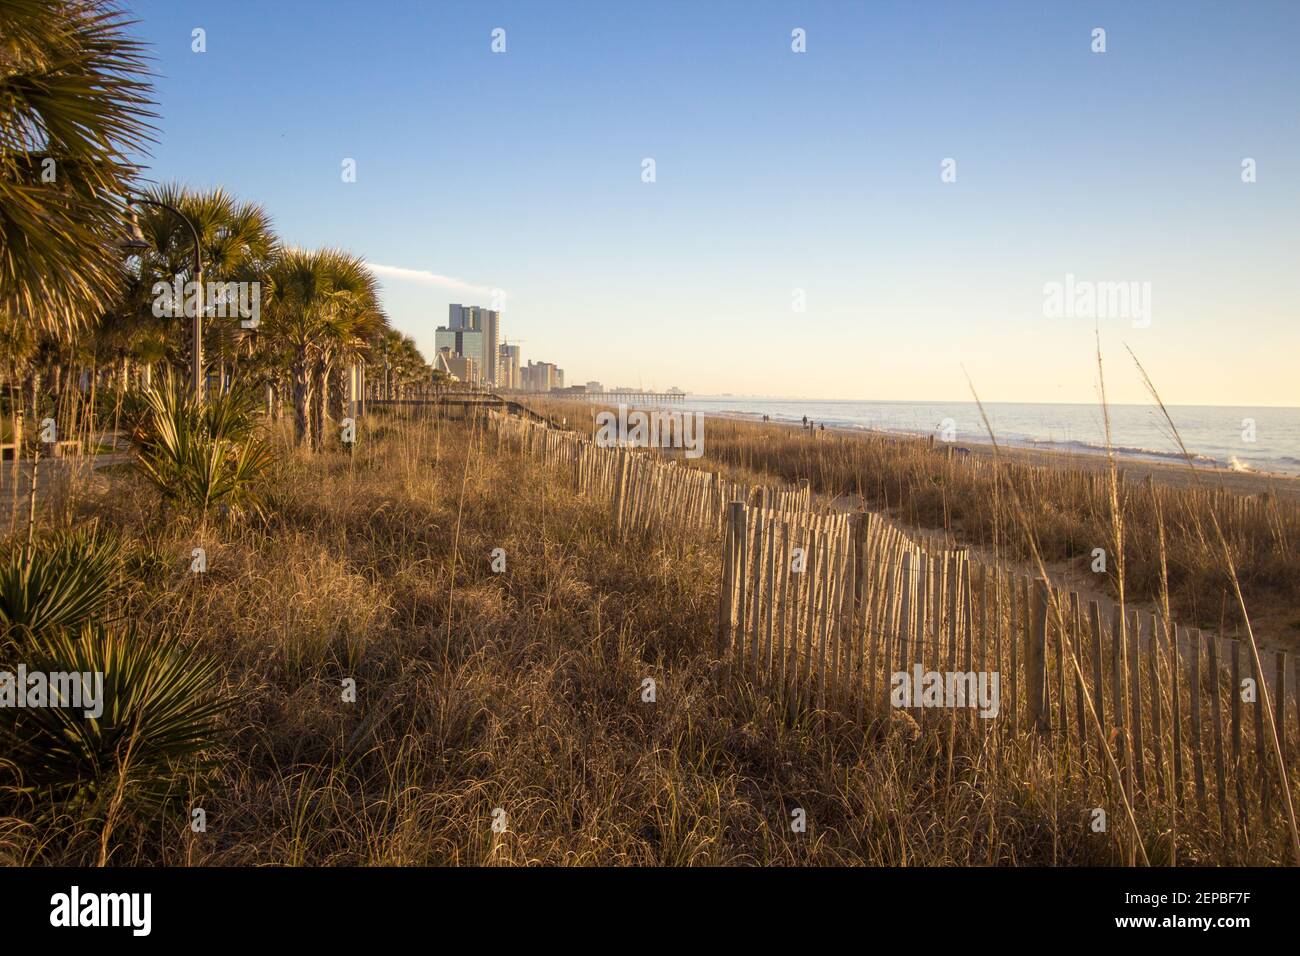 The Myrtle Beach Coast. Palmetto trees and sea oats along the boardwalk of Myrtle Beach, South Carolina on the Atlantic coast. Stock Photo